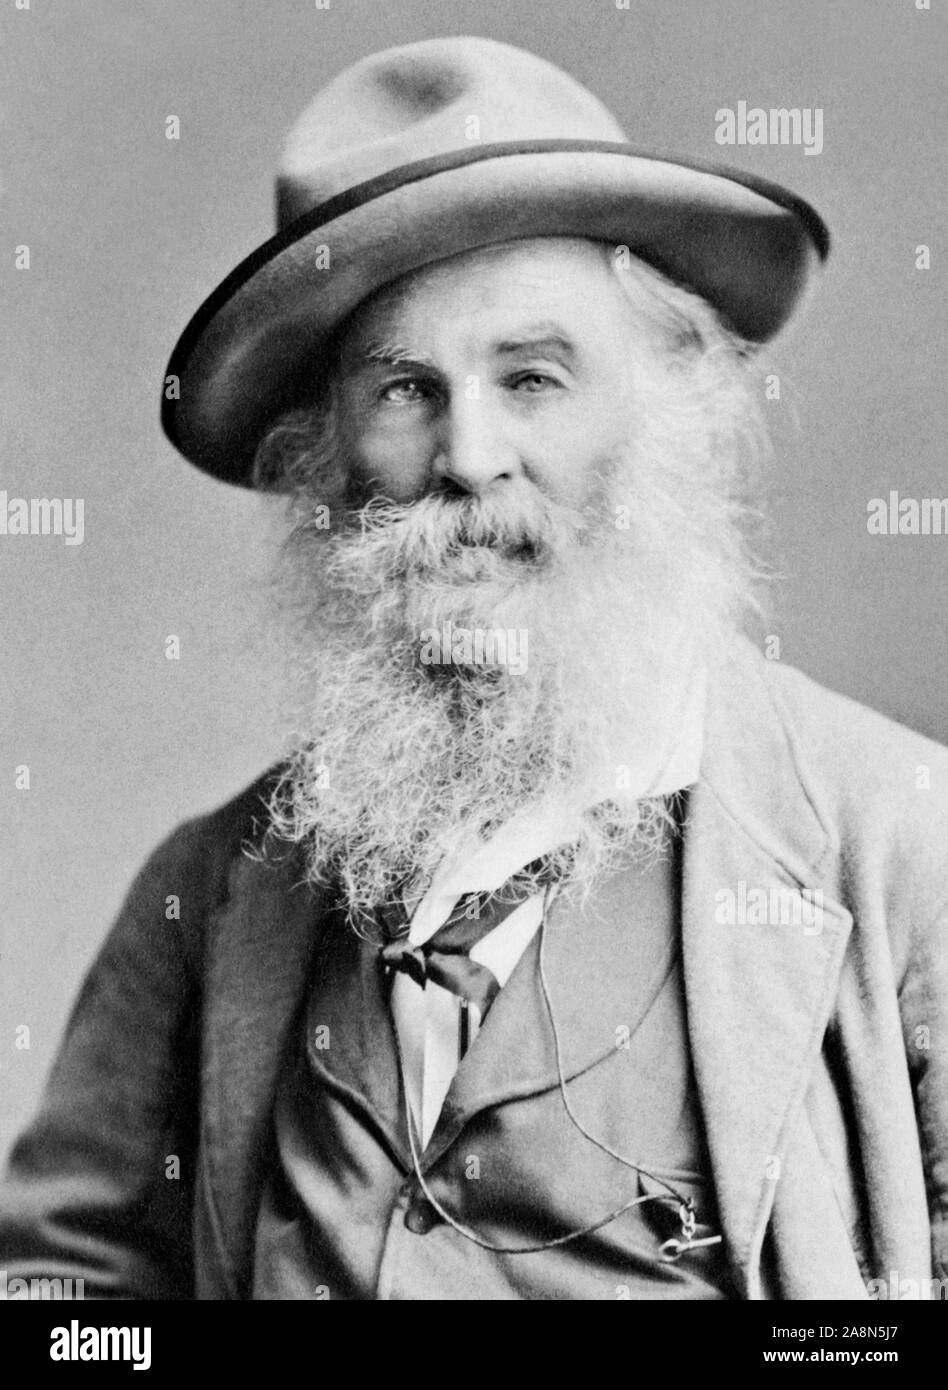 Vintage portrait photo of American poet, essayist and journalist Walt Whitman (1819 – 1892). Photo circa 1885 by Brady of New York. Stock Photo